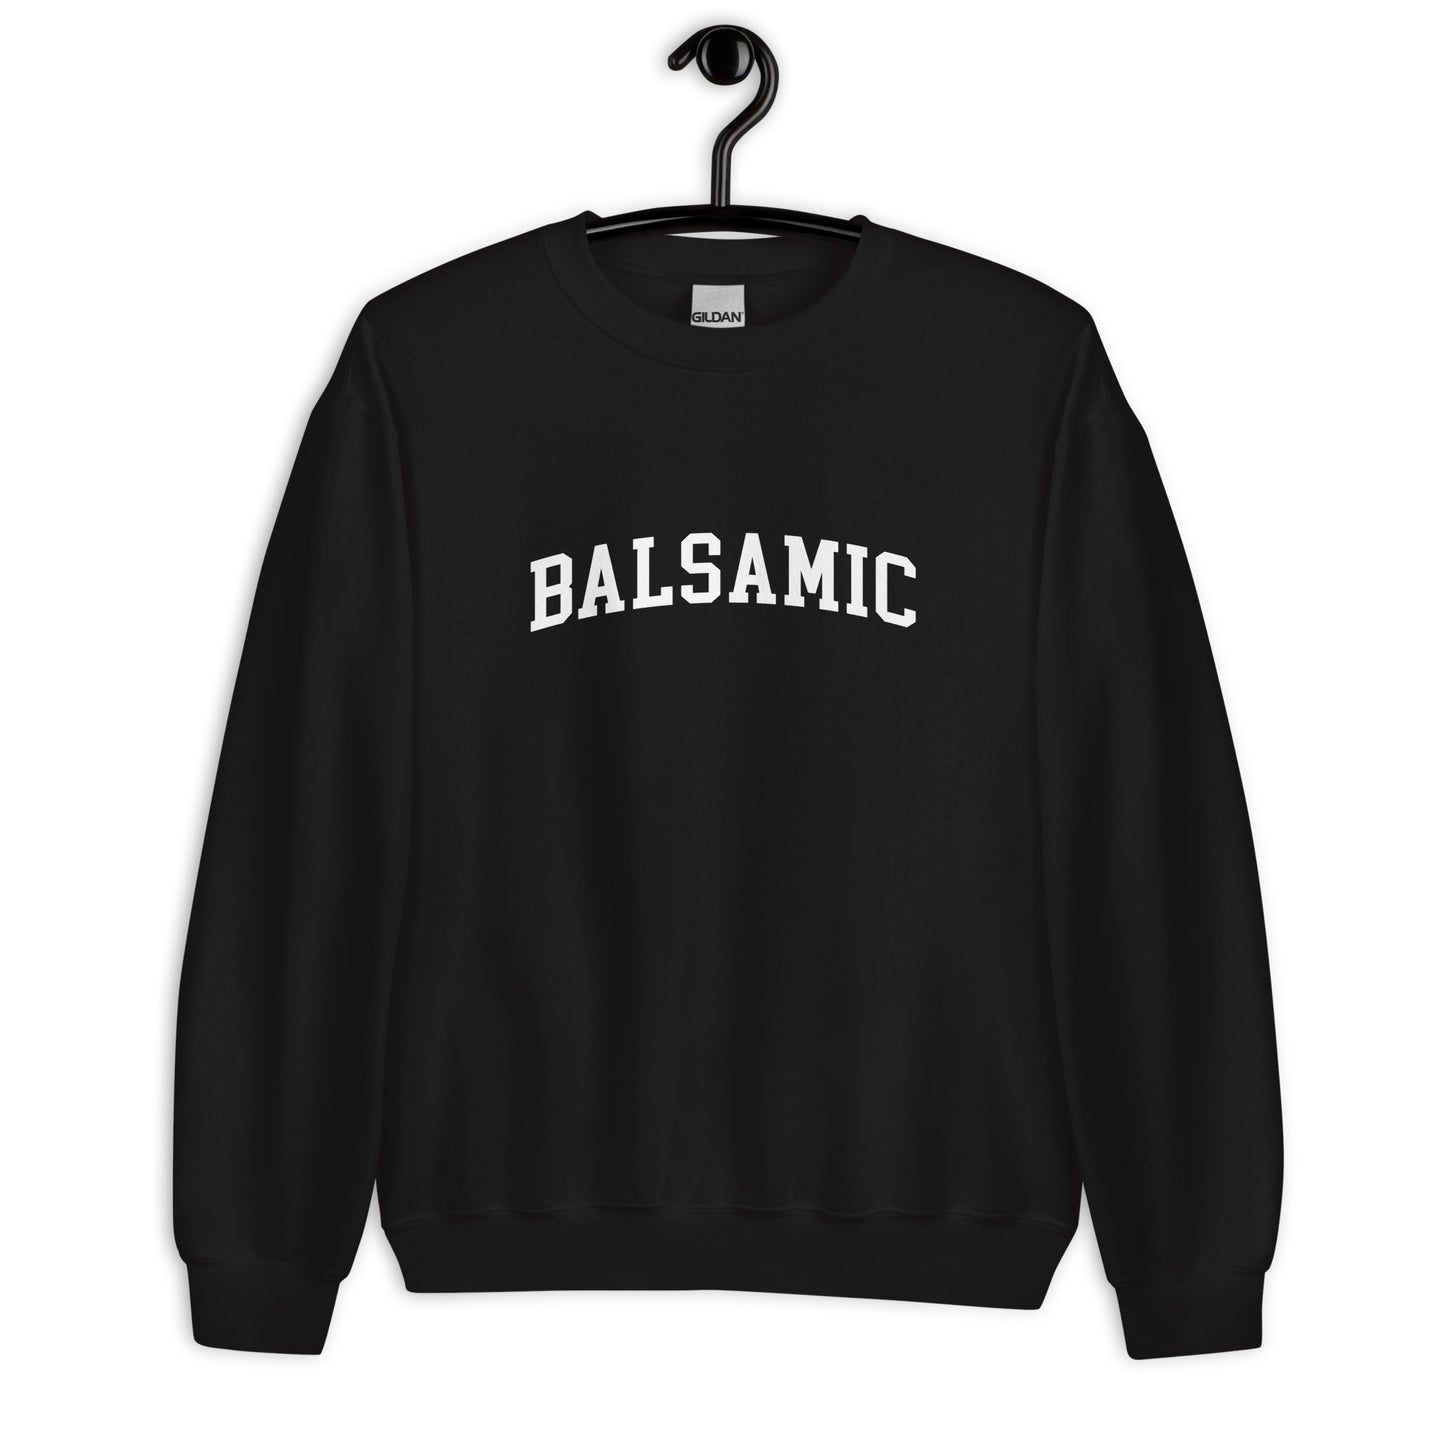 Balsamic Sweatshirt - Arched Font